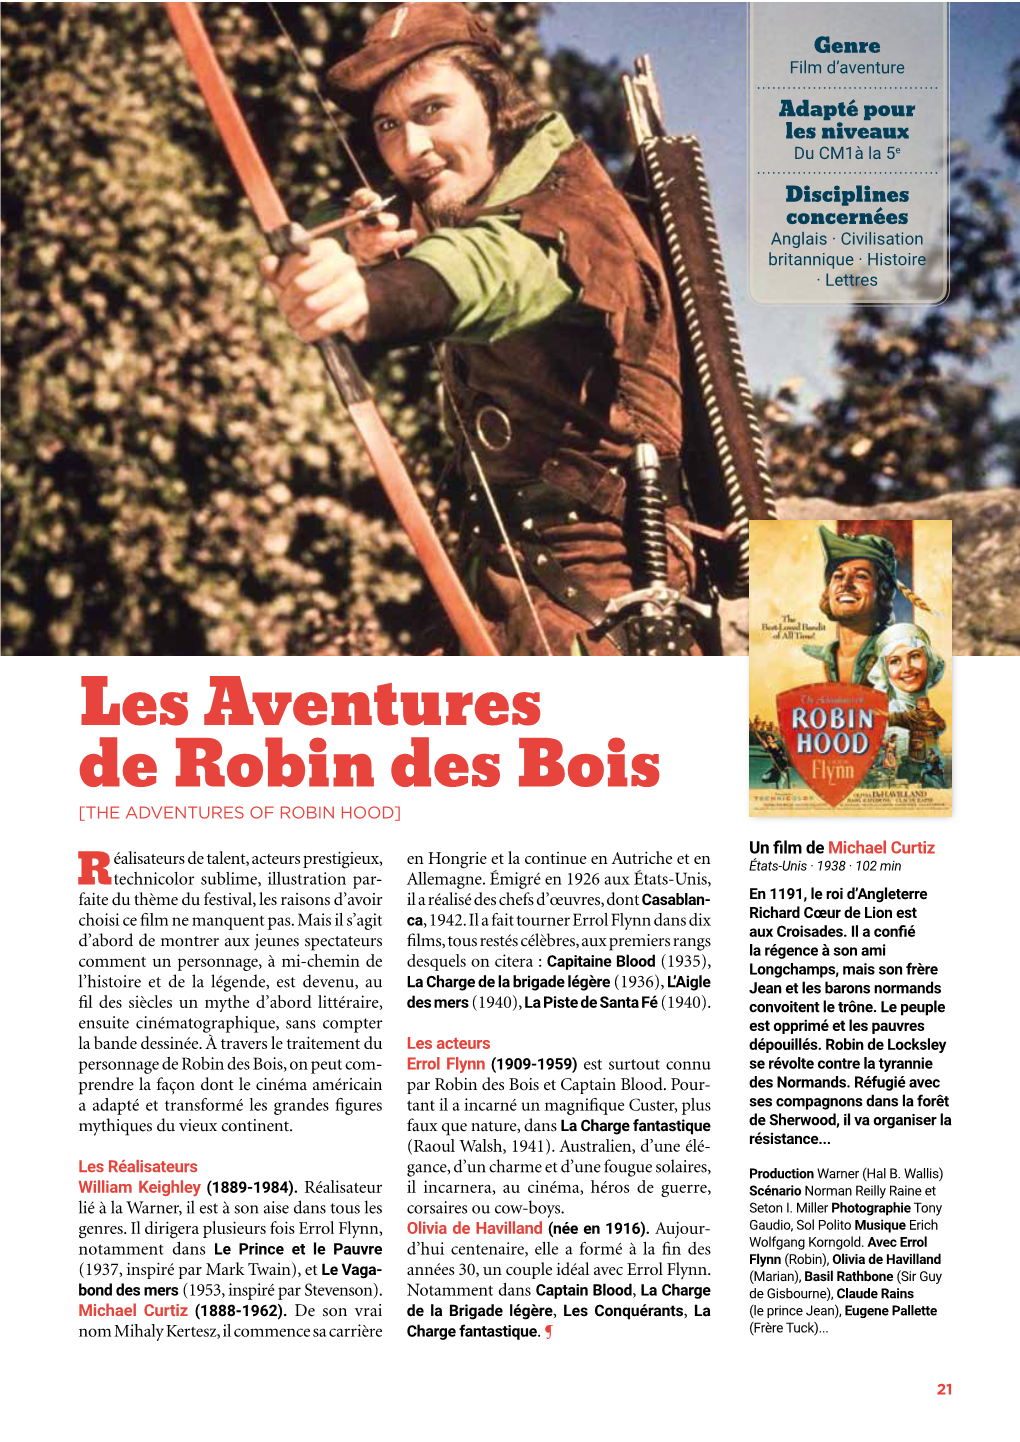 Les Aventures De Robin Des Bois [THE ADVENTURES of ROBIN HOOD]